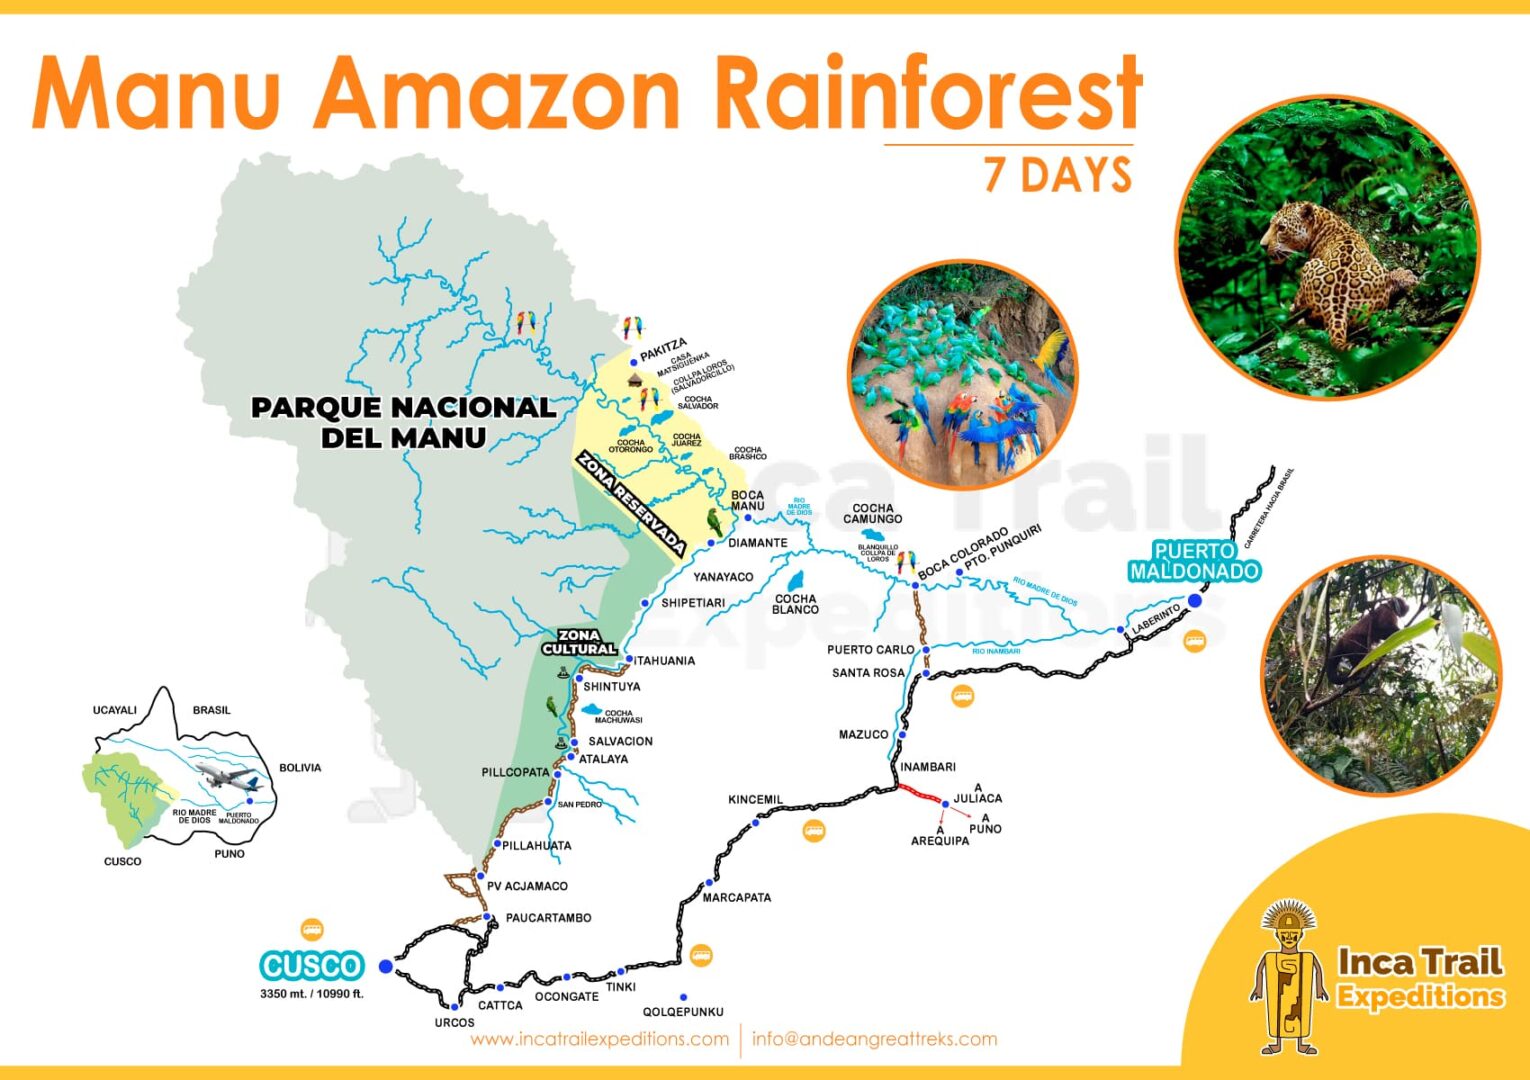 Manu Amazon Rainforest Reserved Zone 7 Days